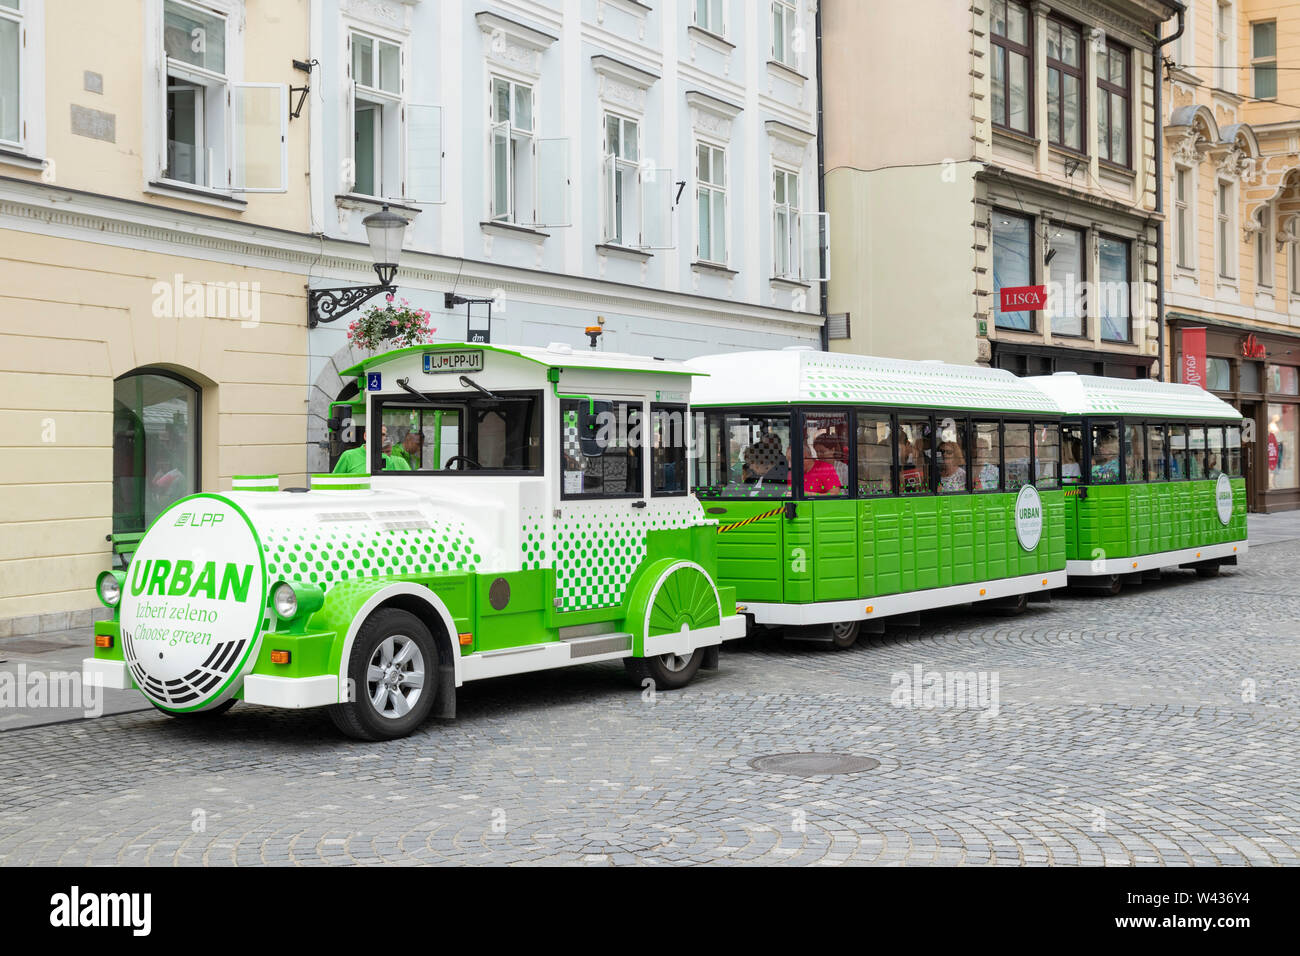 Environmentally-friendly circular tourist train ride with the Urban electric train in central Ljubljana Slovenia EU Europe Stock Photo